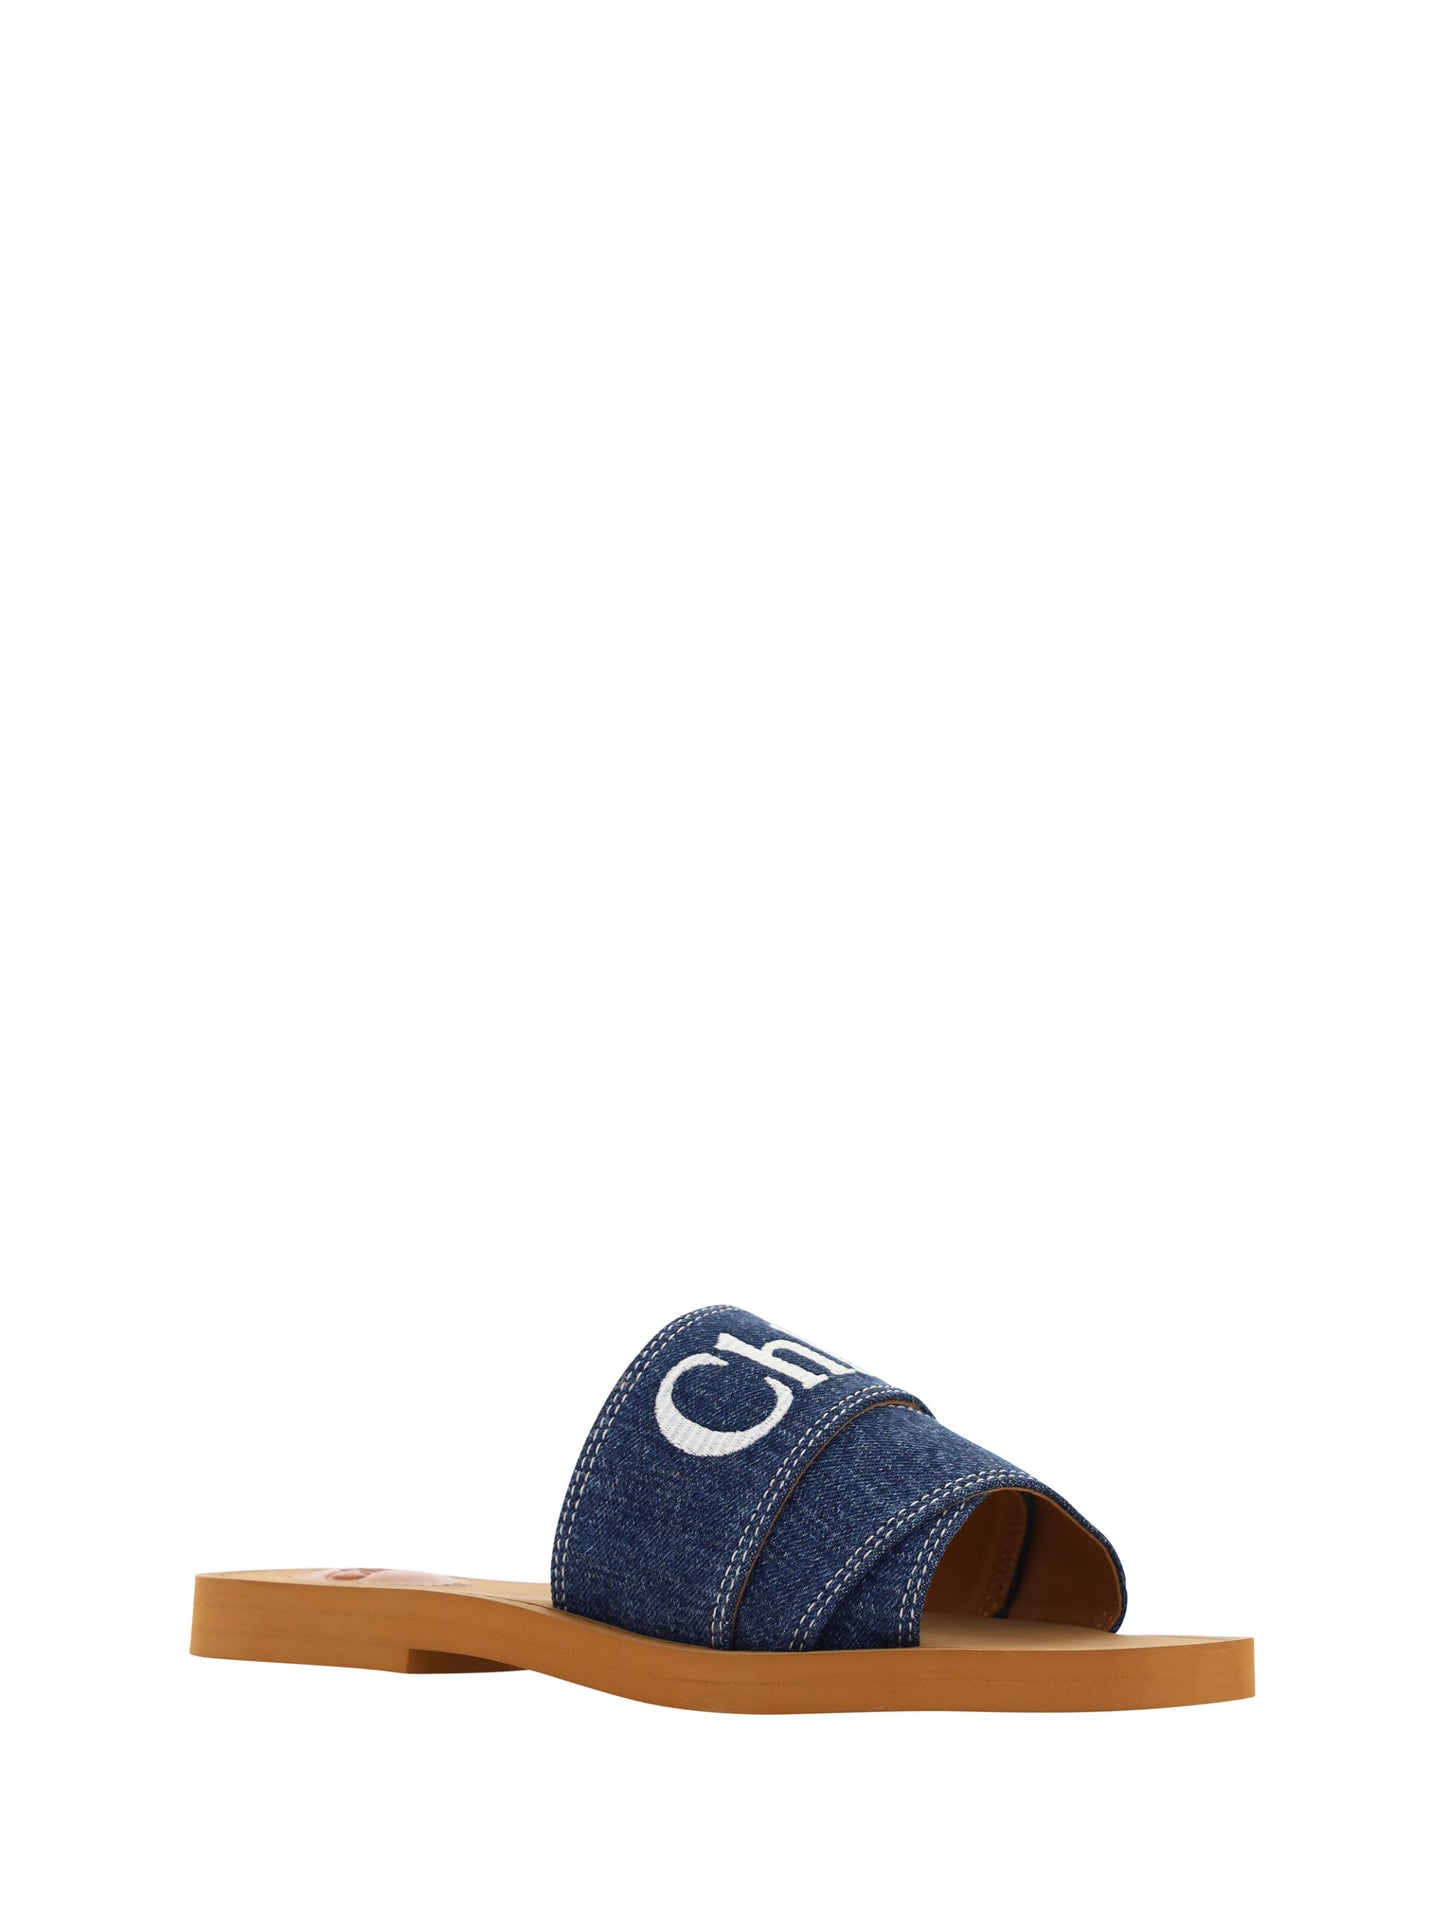 Sumptuous Cotton Woody Slide Sandals in Denim Blue